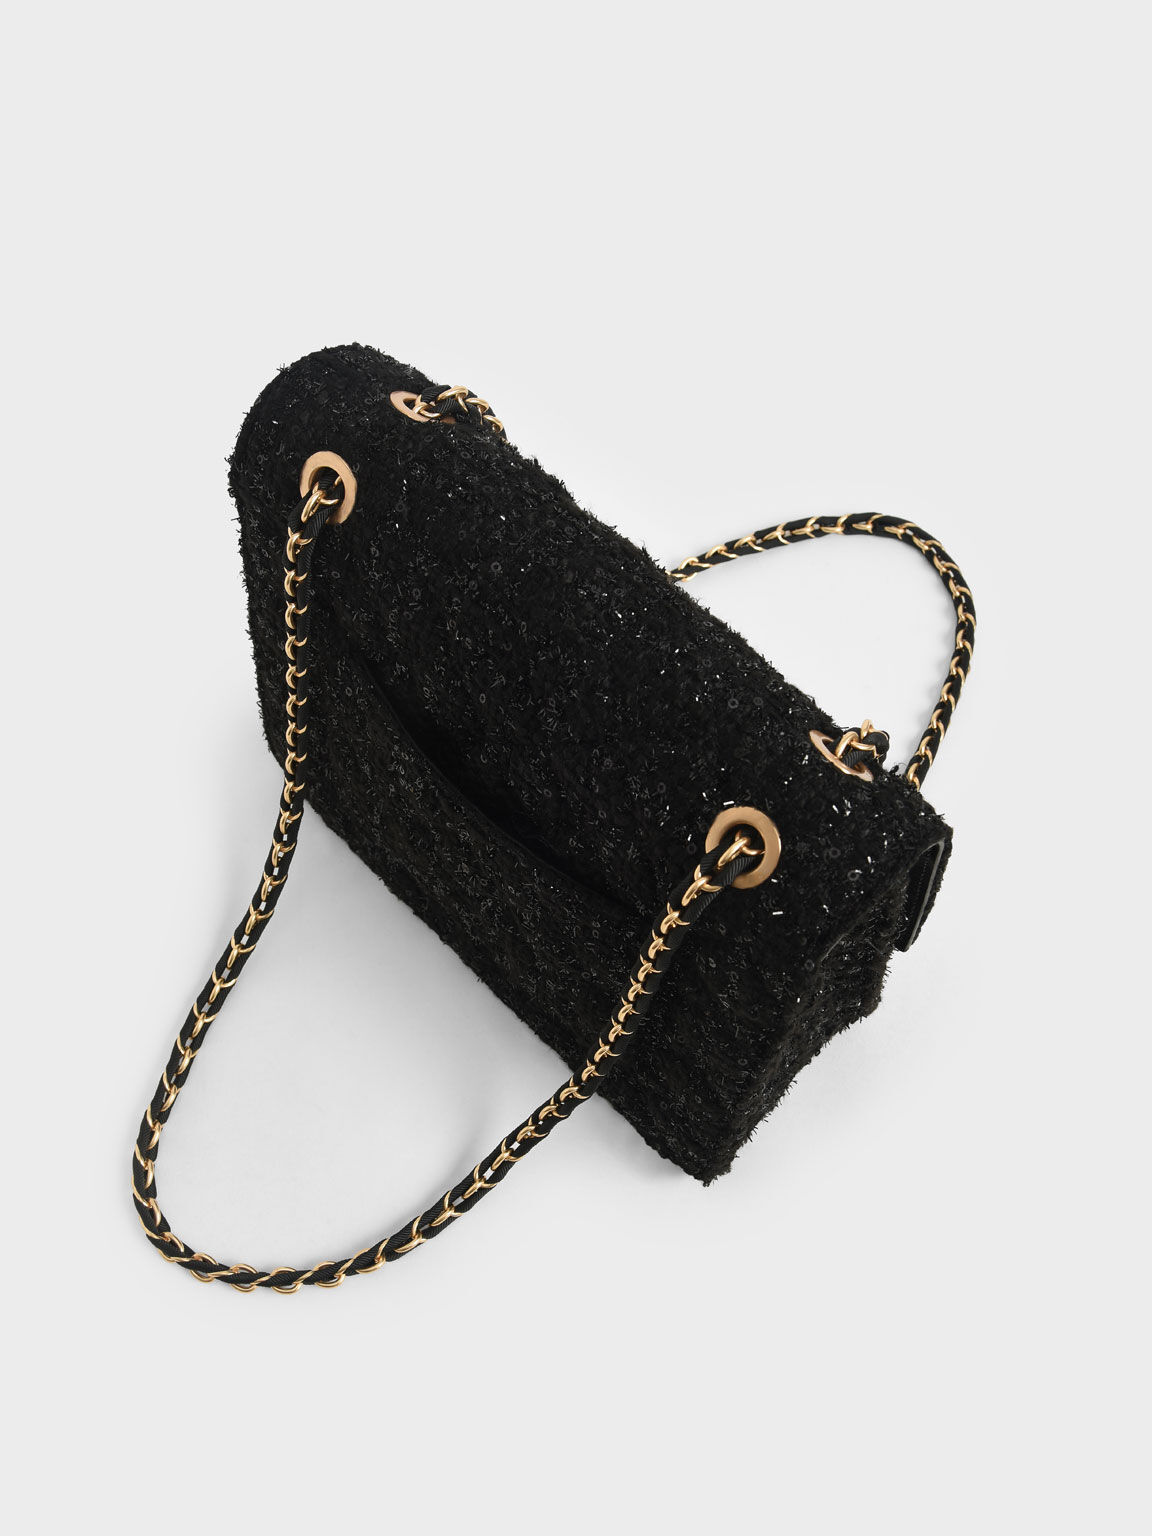 Tweed Chain Strap Bag, Black, hi-res